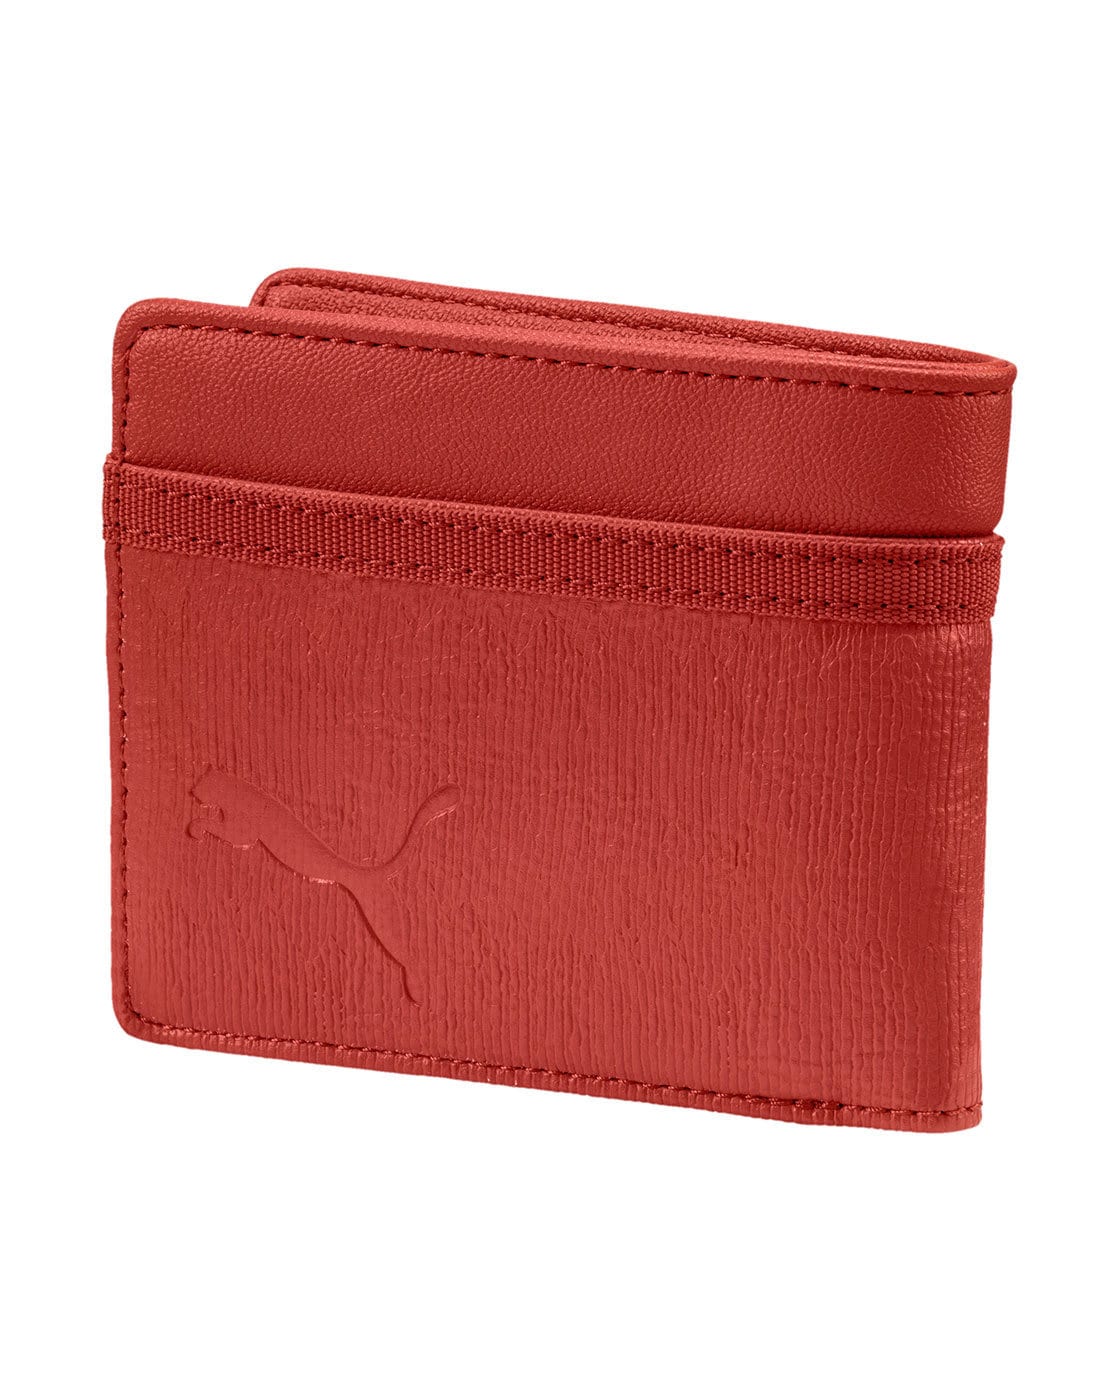 Authentic Puma Ferrari Red Bifold Genuine PU Leather Men Wallet 100% Brand  New | eBay